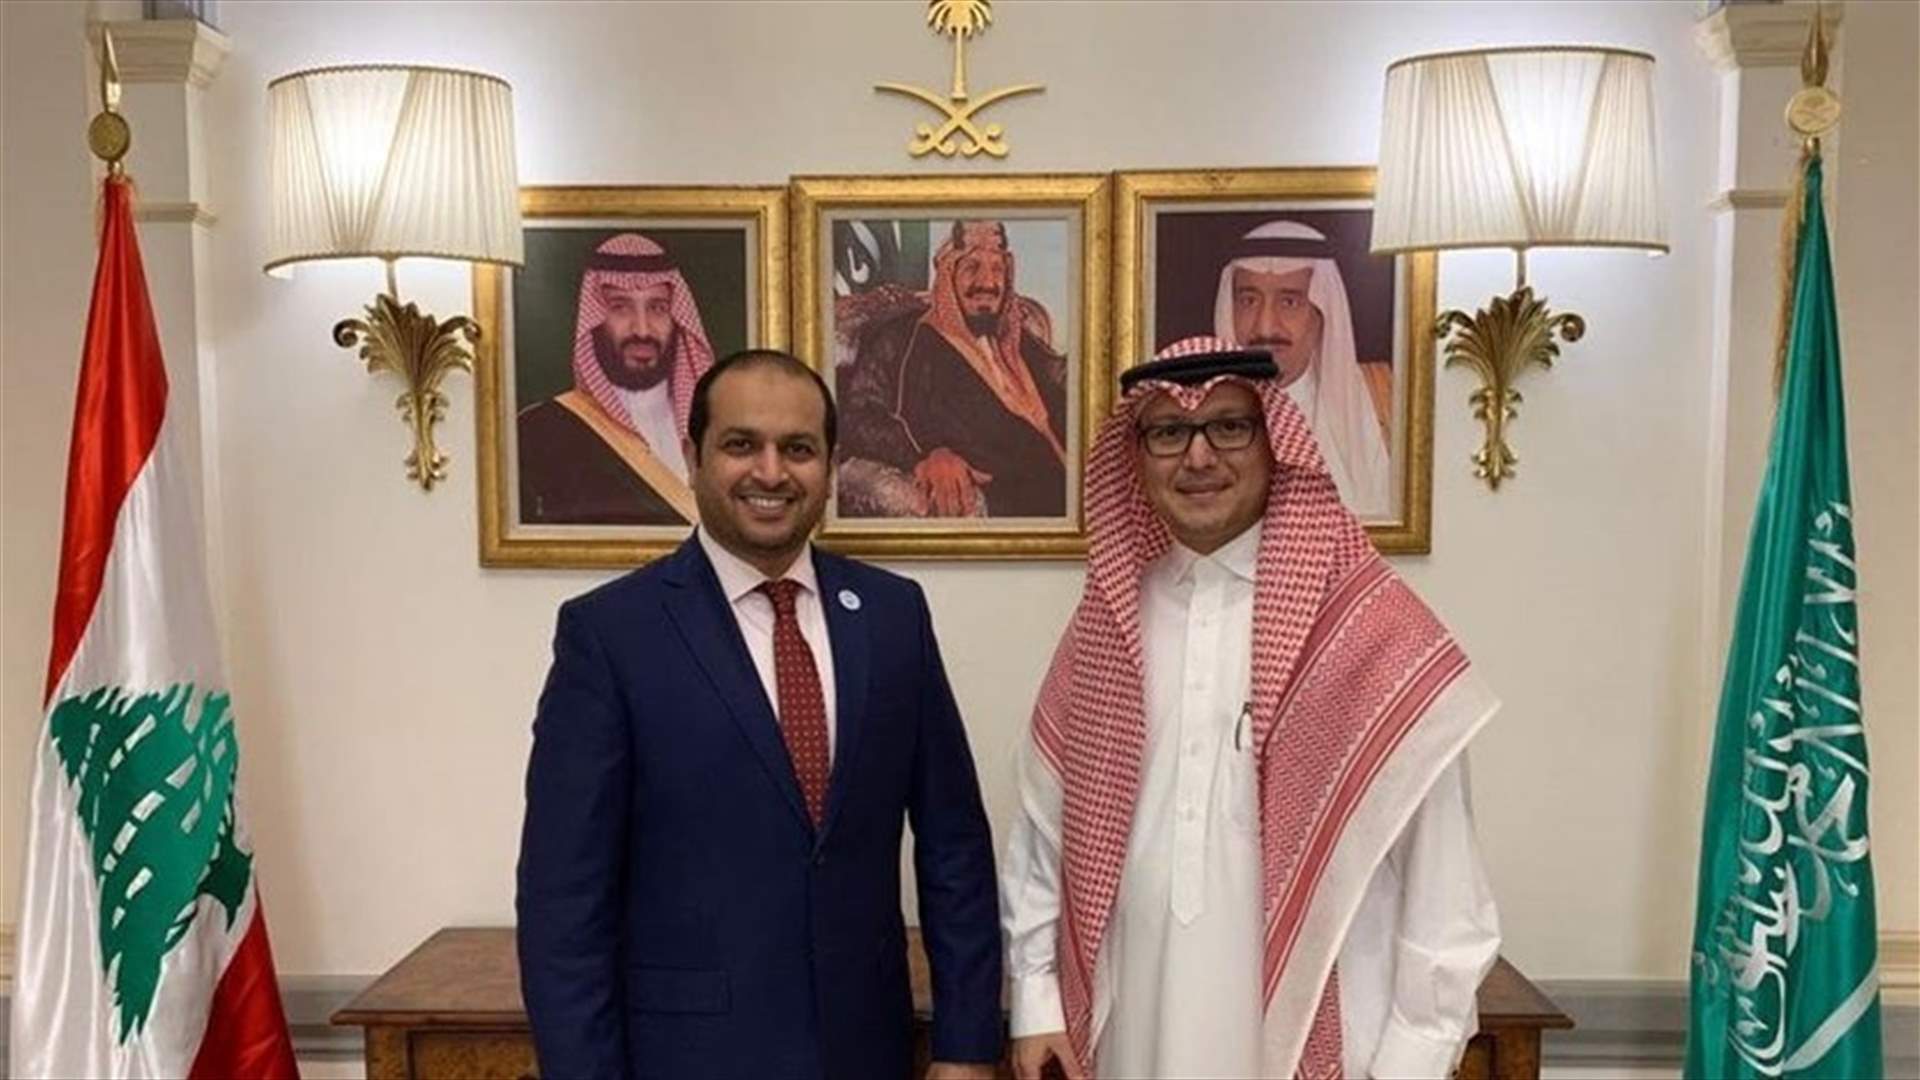 UAE Ambassador meets with Bukhari, confirms UAE’s constant support to Saudi Arabia